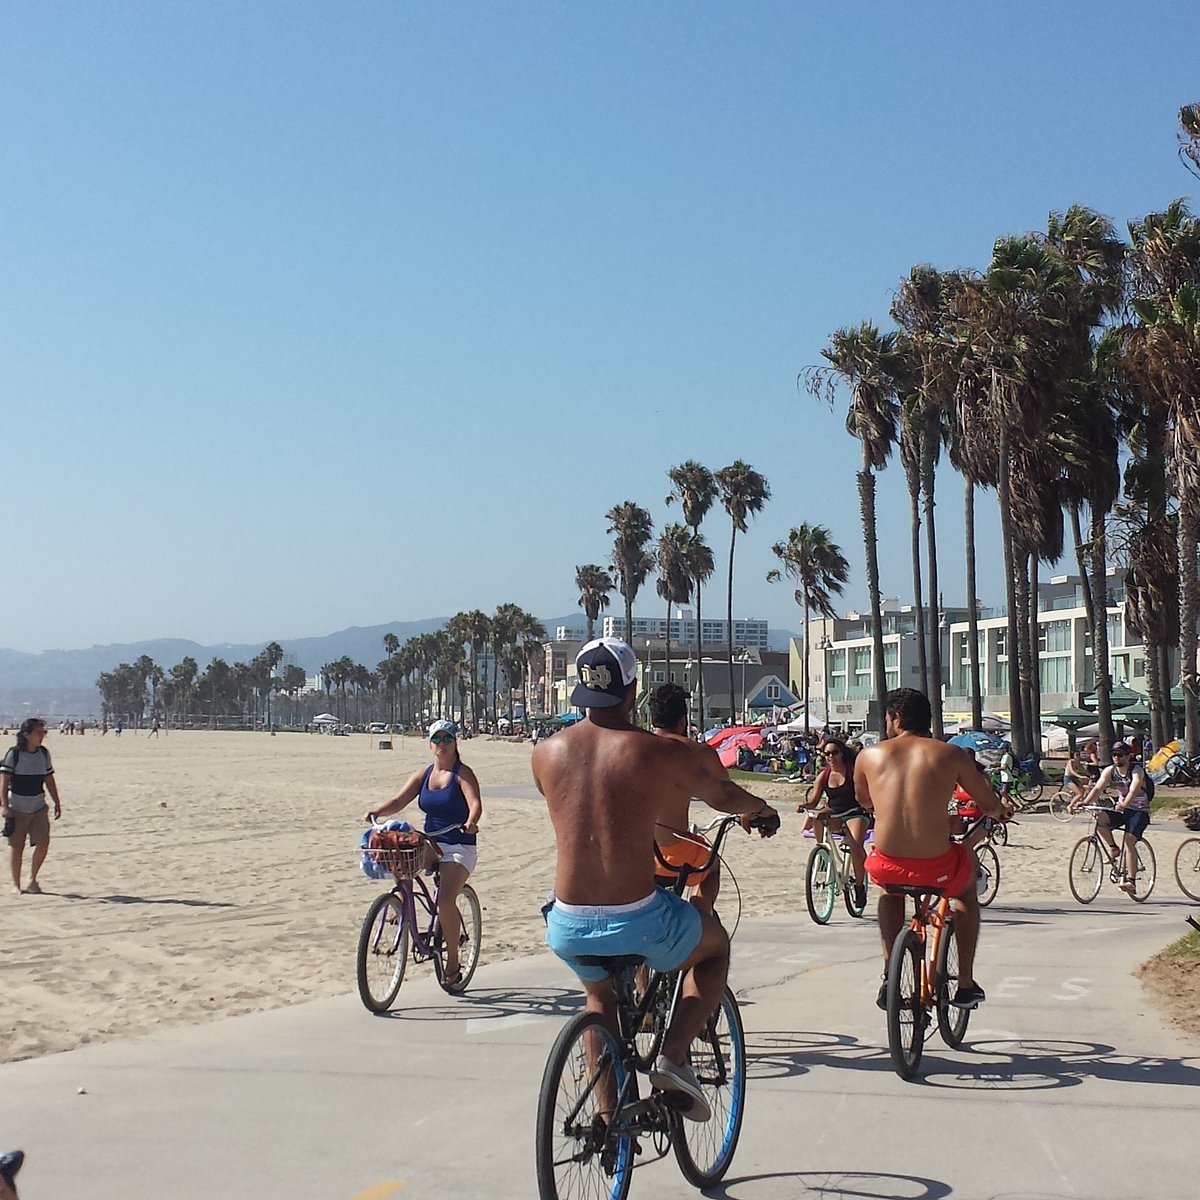 Tandem (ALL DAY) – Venice Boardwalk Bike Rental